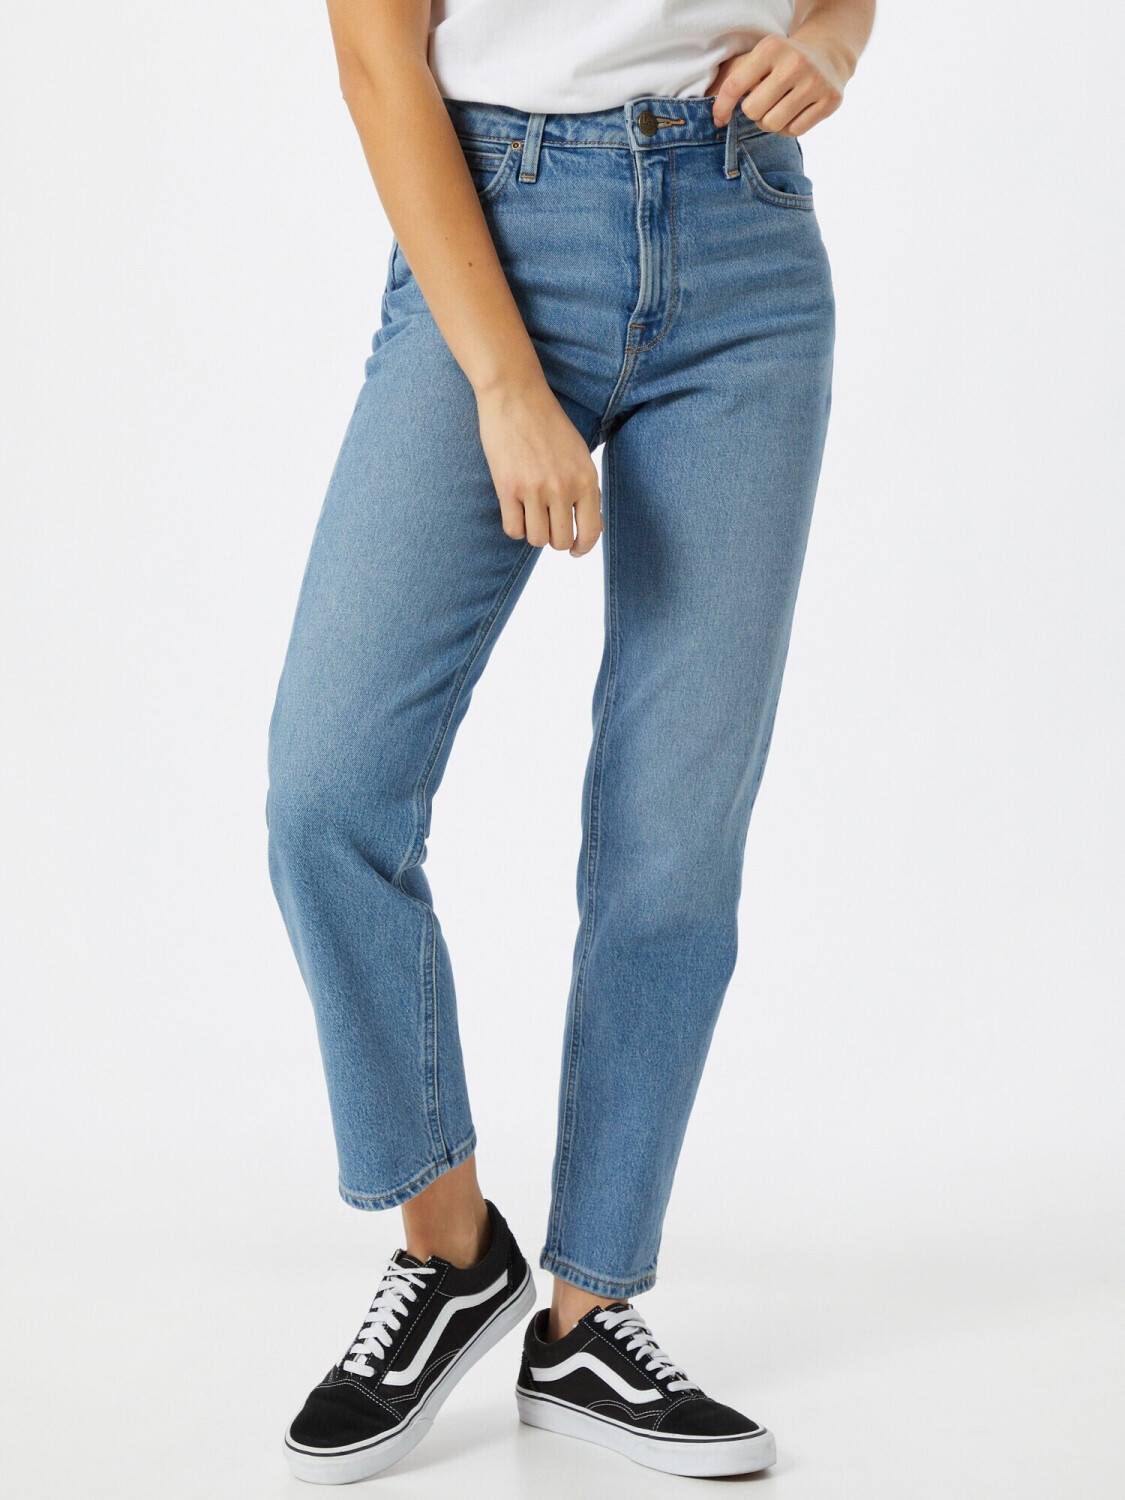 Buy Lee Women Carol Jeans mid soho from £18.90 (Today) – Best Deals on ...